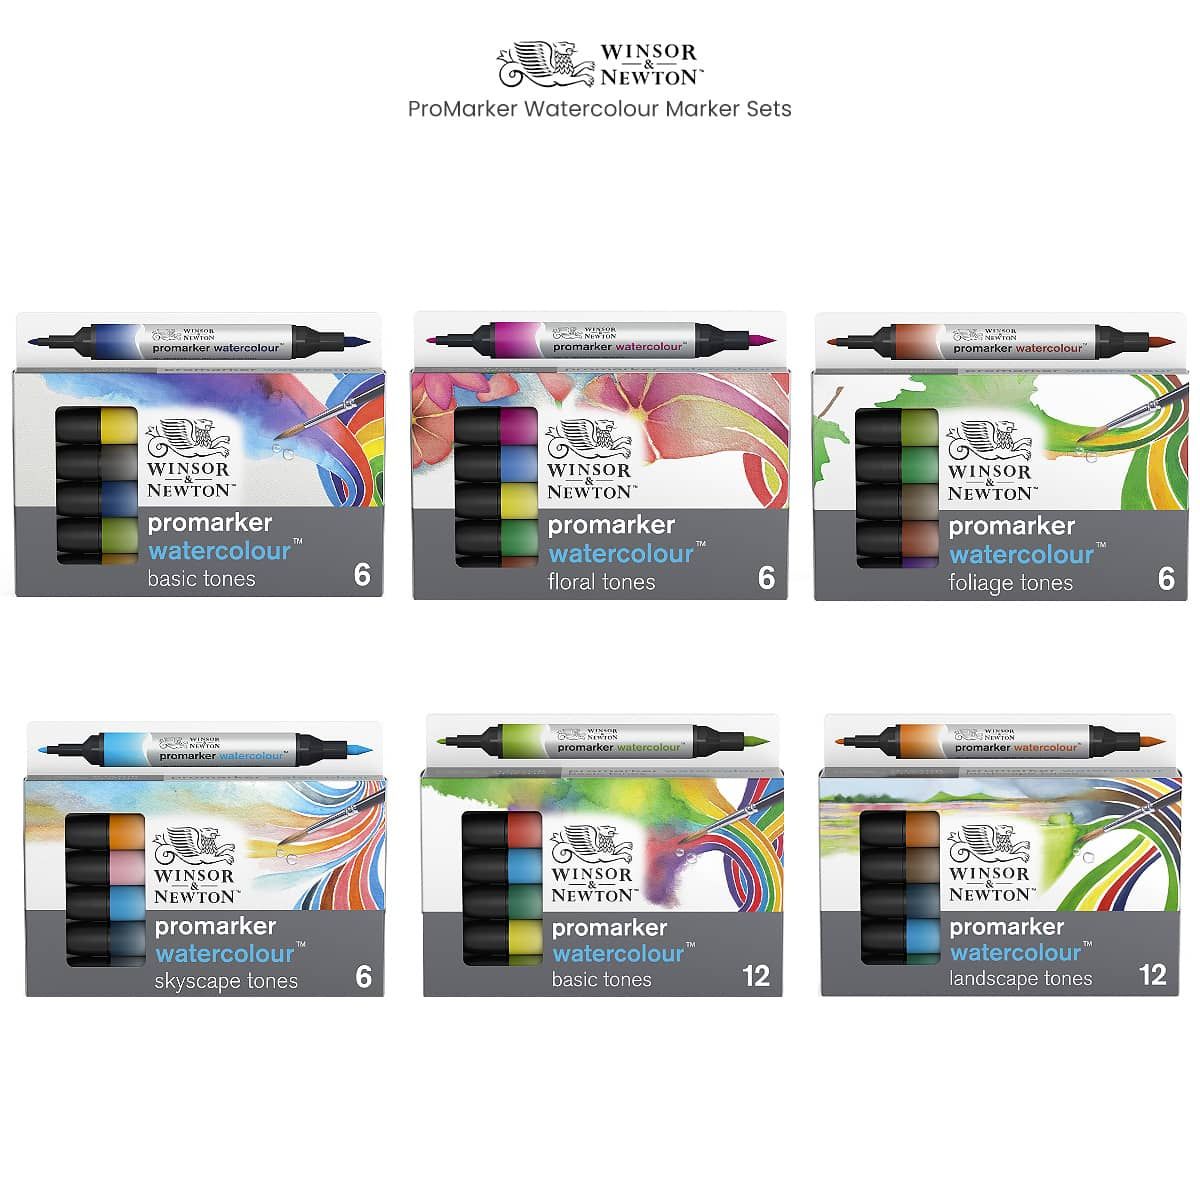 Winsor & Newton Promarker Professional Design Marker Pens